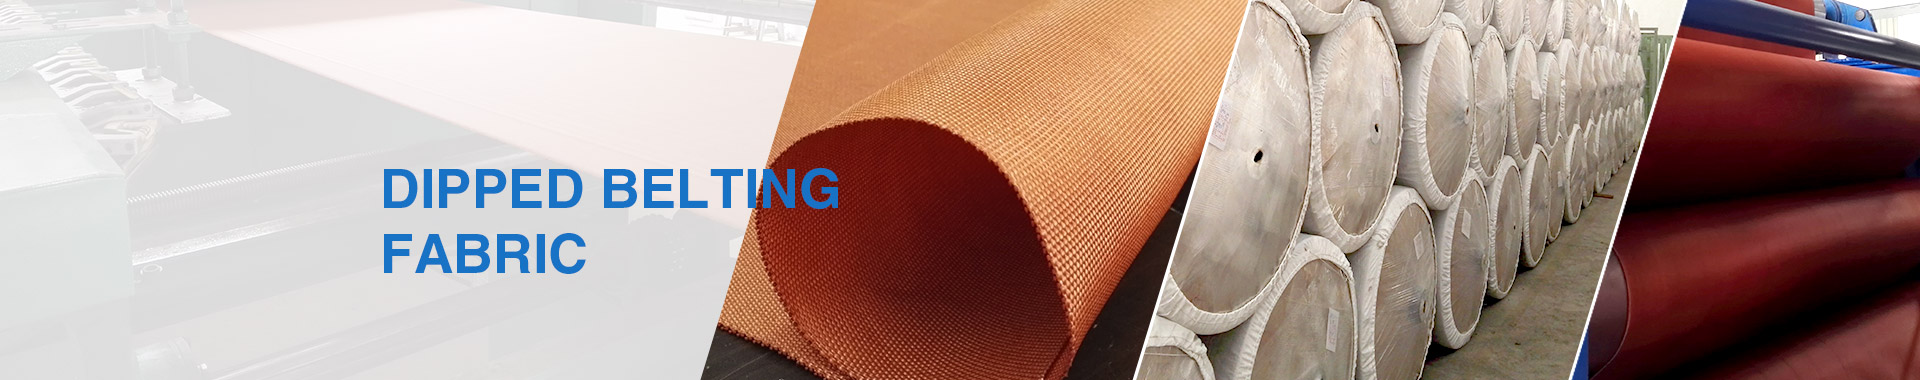 Belting Fabric